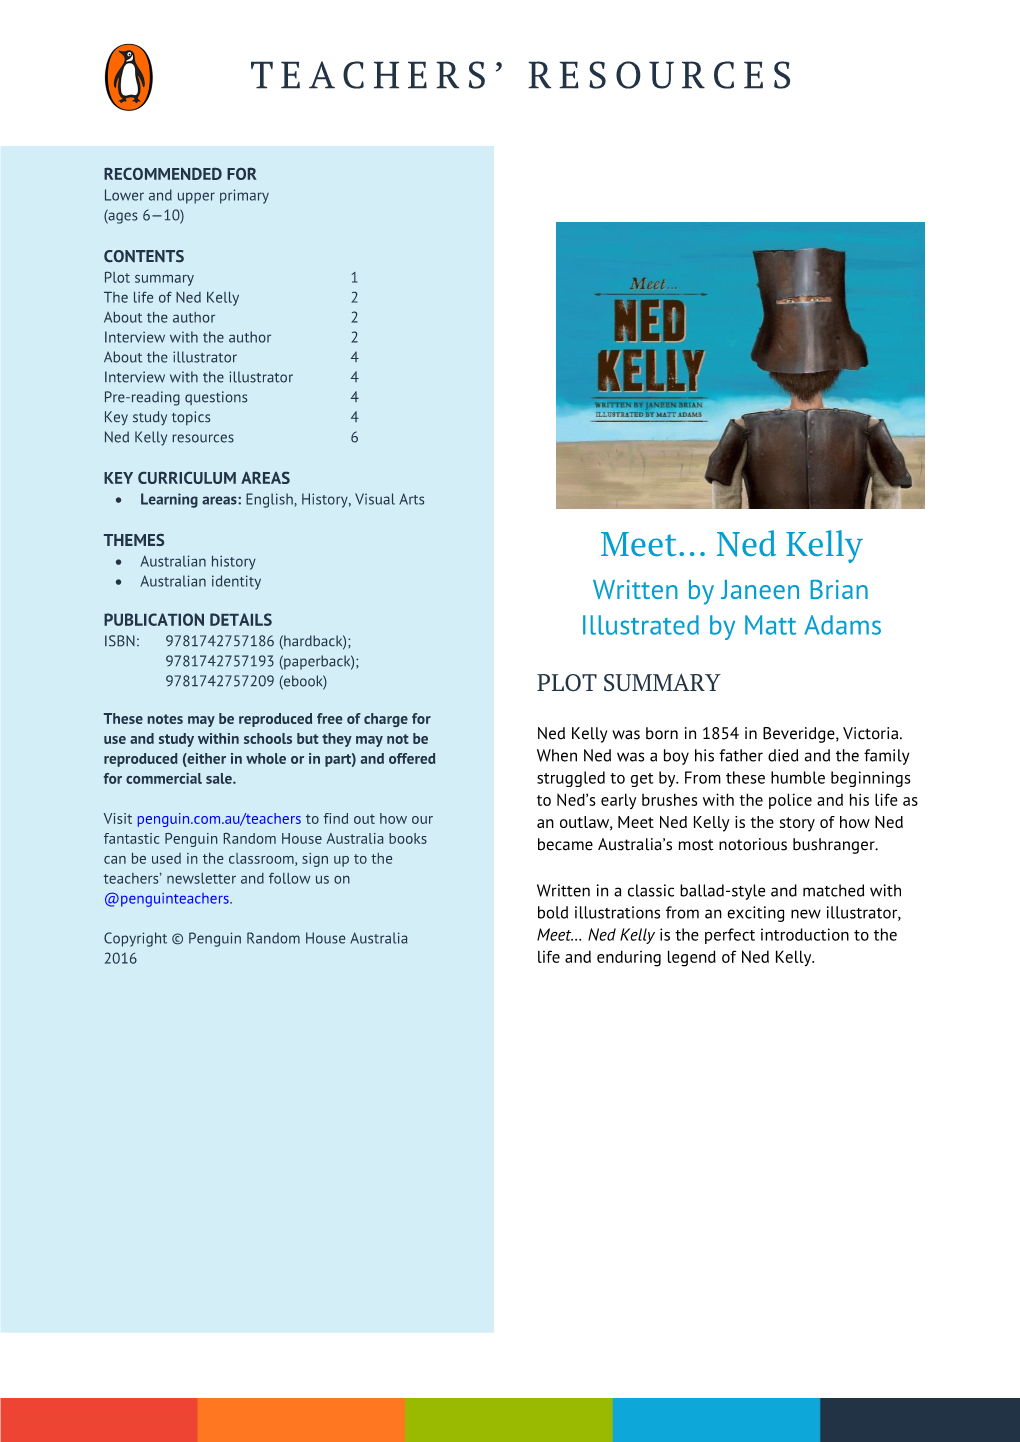 Meet... Ned Kelly